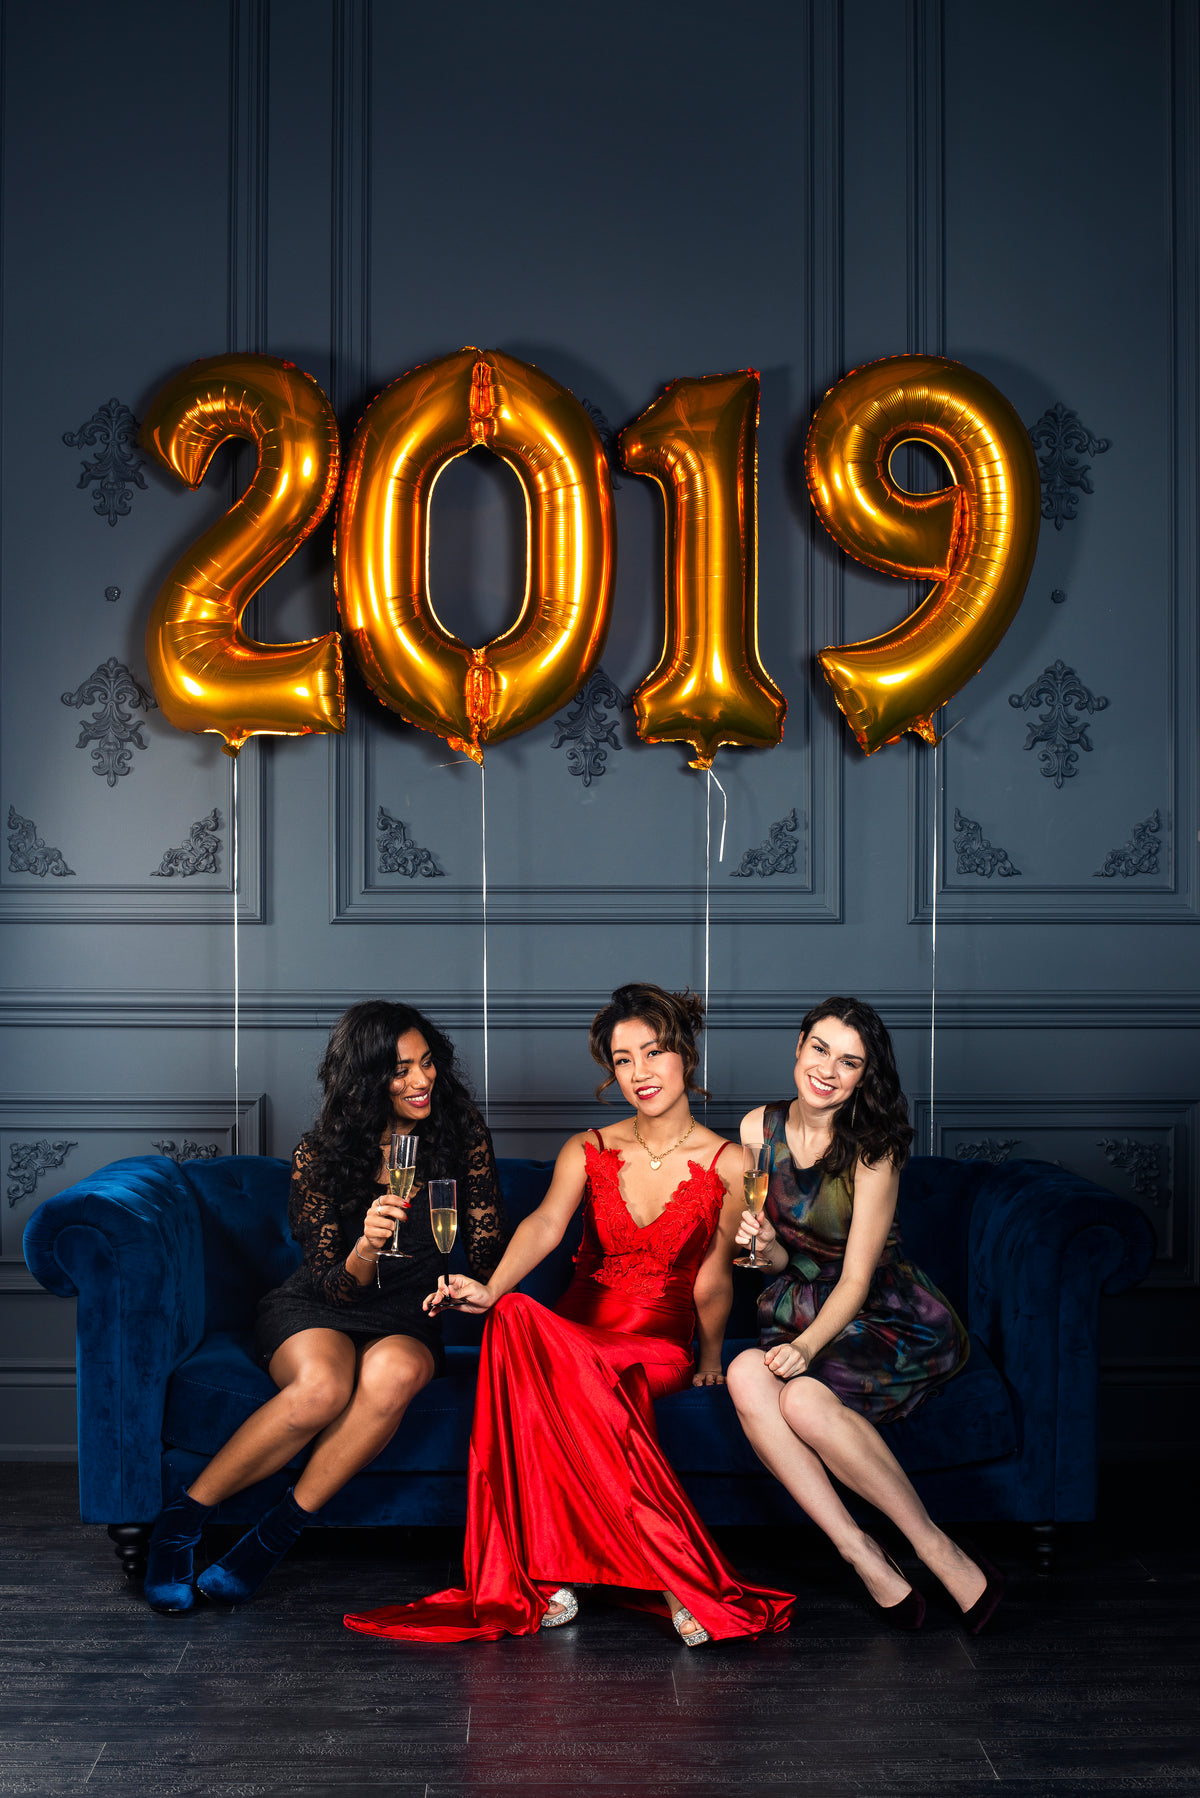 three woman strike a new year's pose